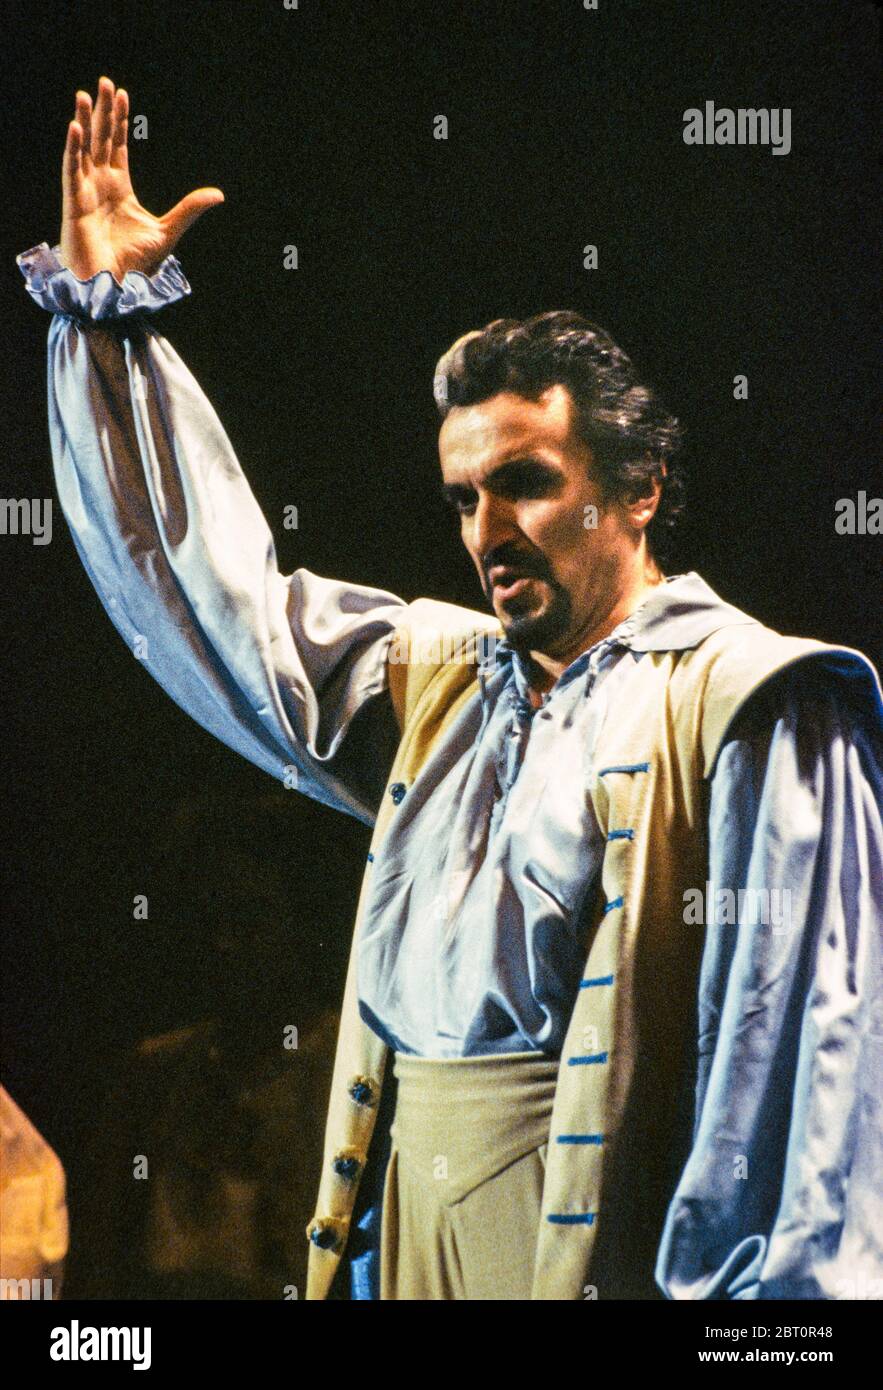 Ruggero Raimondi bass baritone opera singer performing at the Paris Opera in Mozarts Don Giovanni 1981 Stock Photo